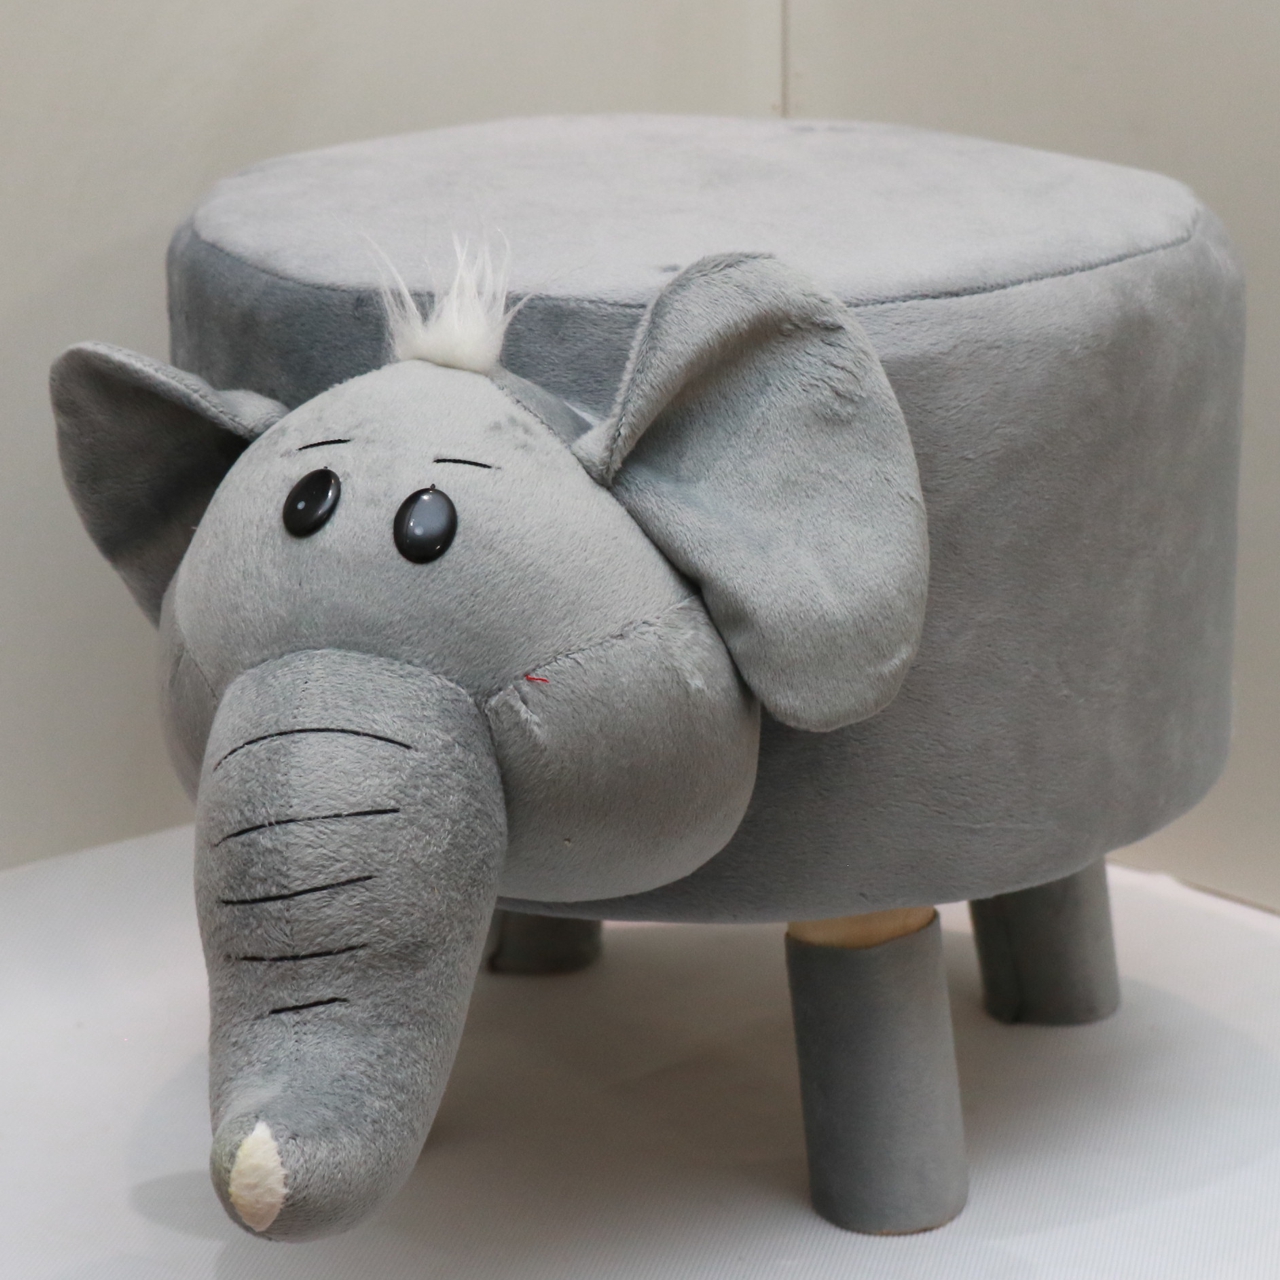 پاف کودک مدل فیل -  - 2